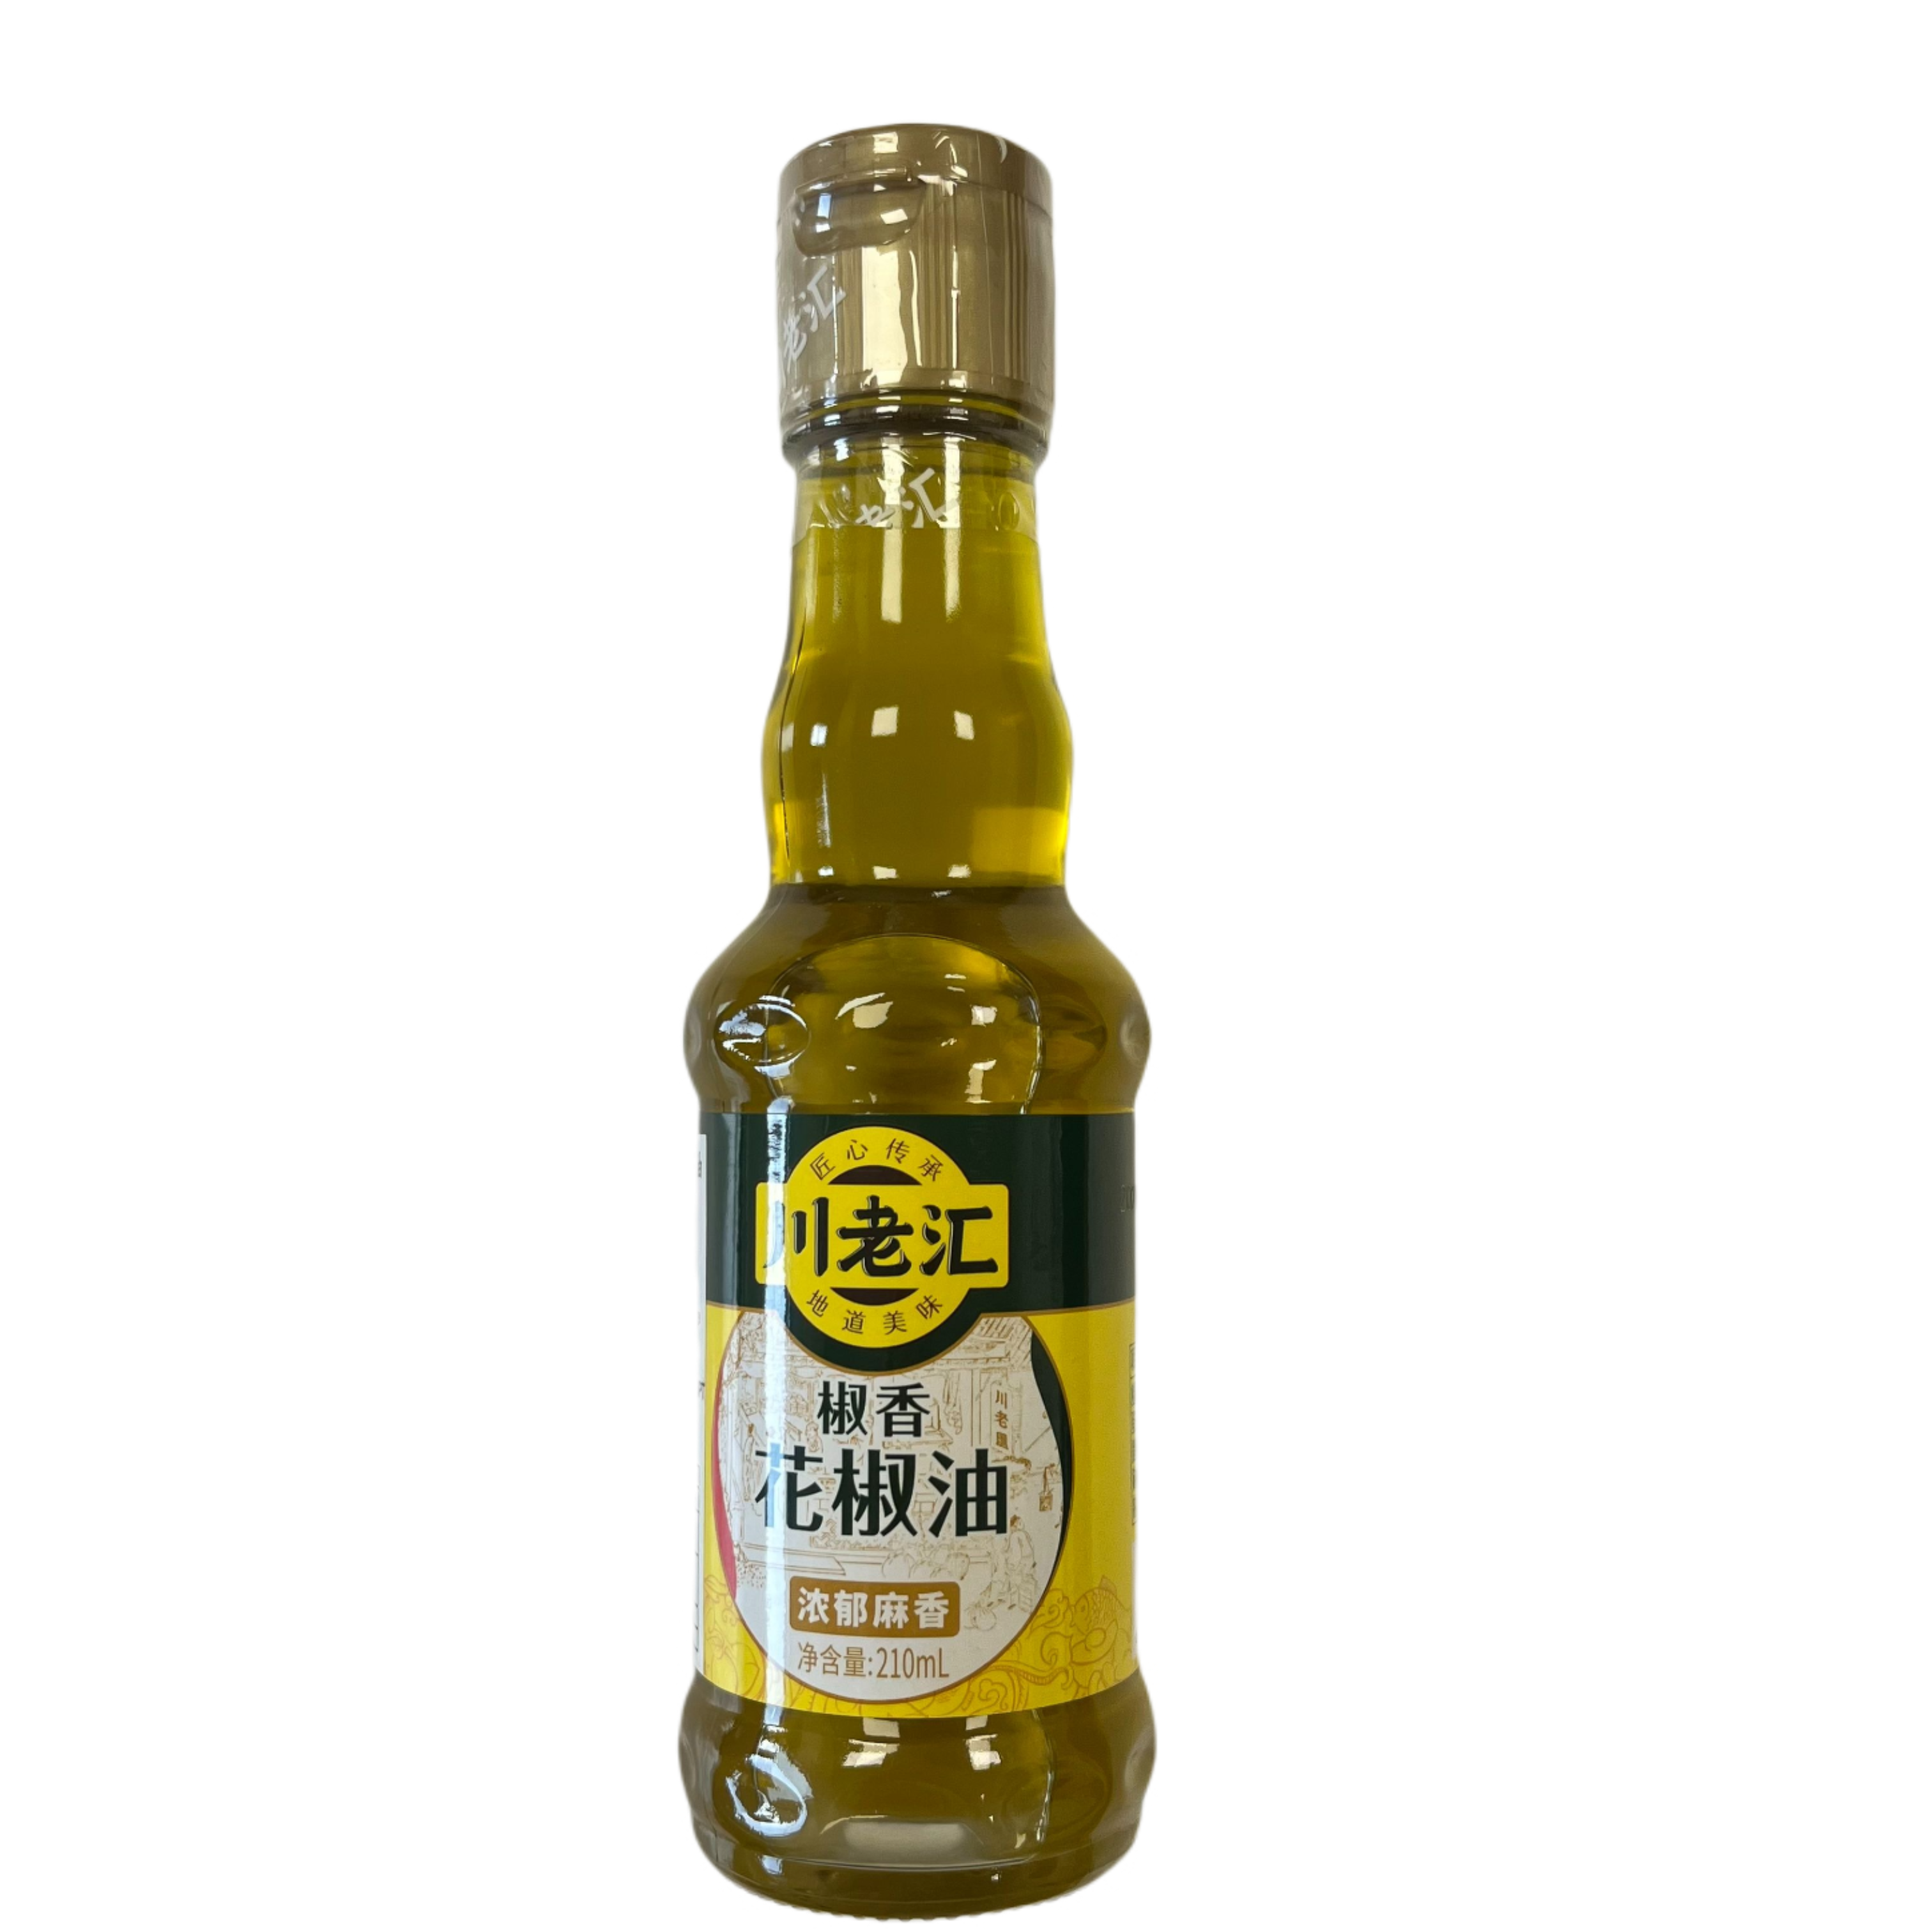 CLH Sichuan Peppercorn Oil 210ml 川老汇花椒油– Retour UK